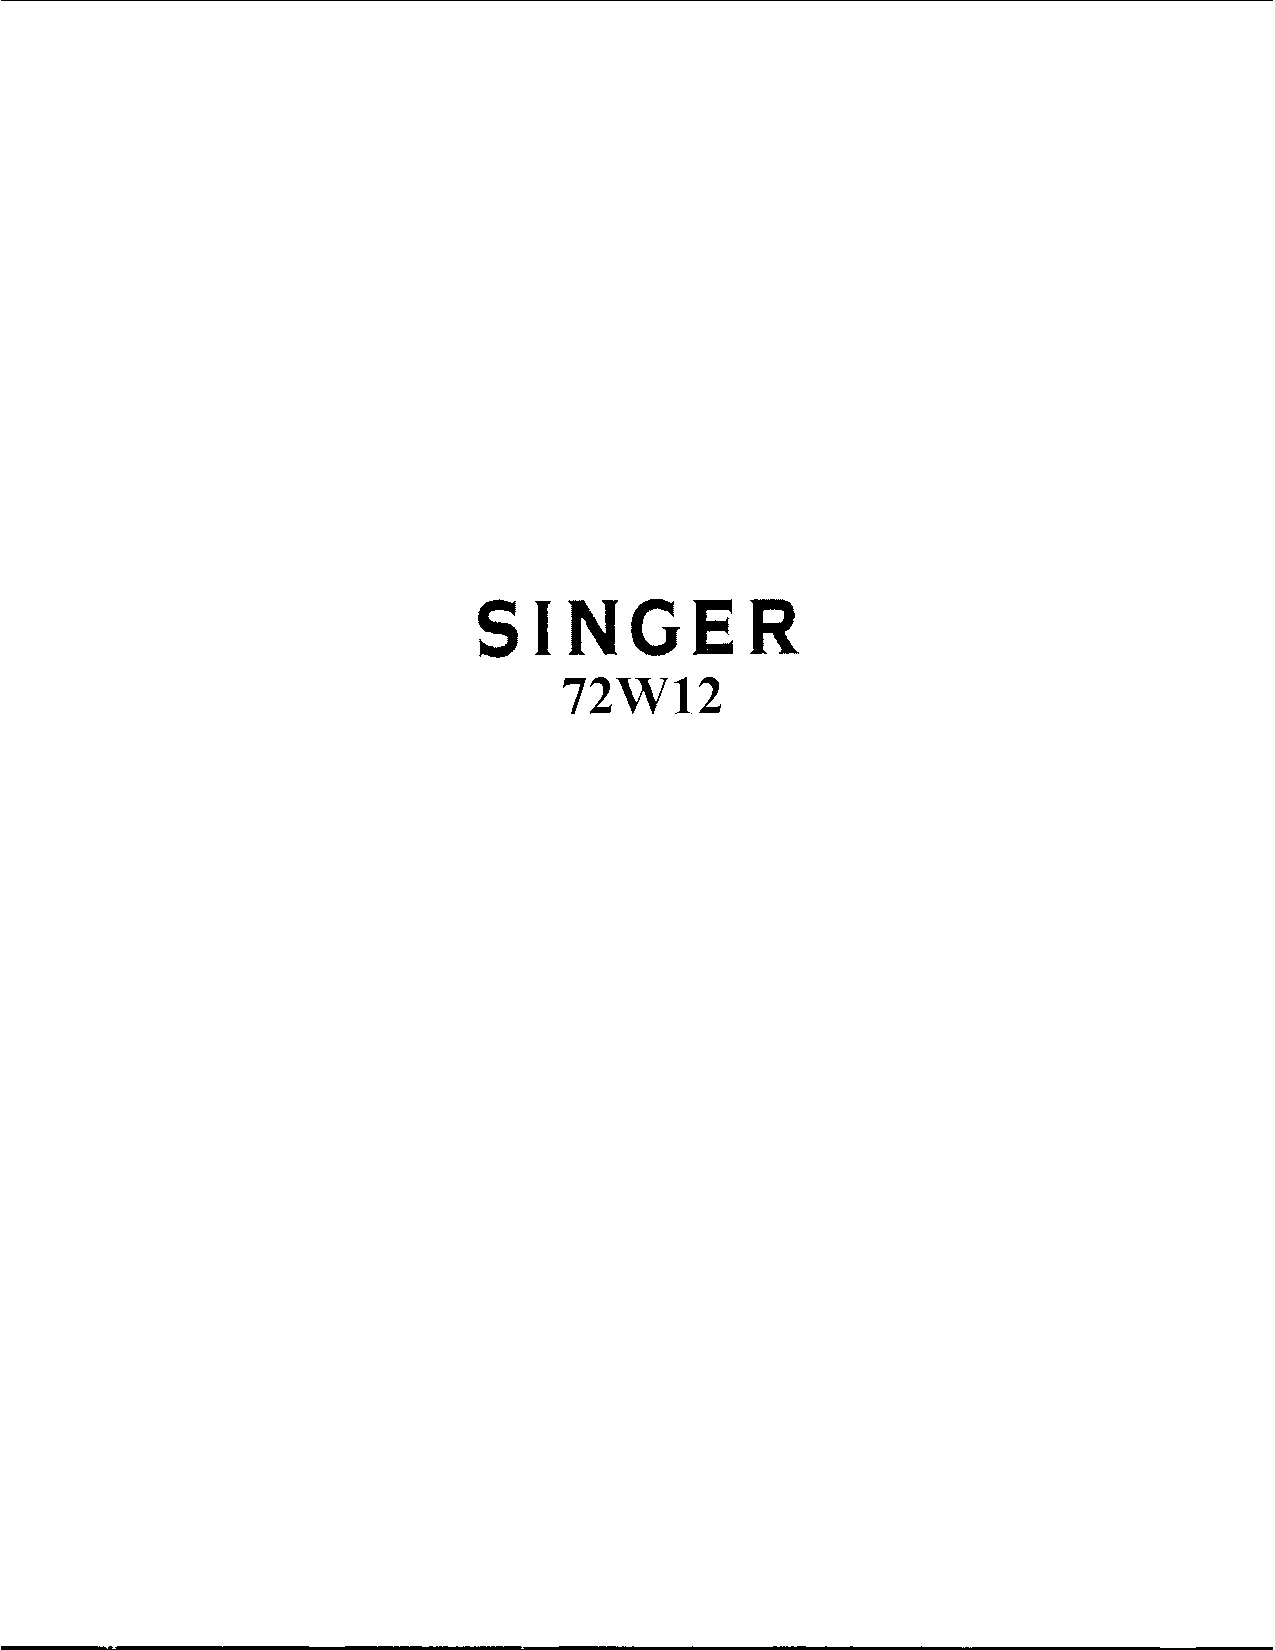 Singer 72W12 User Manual